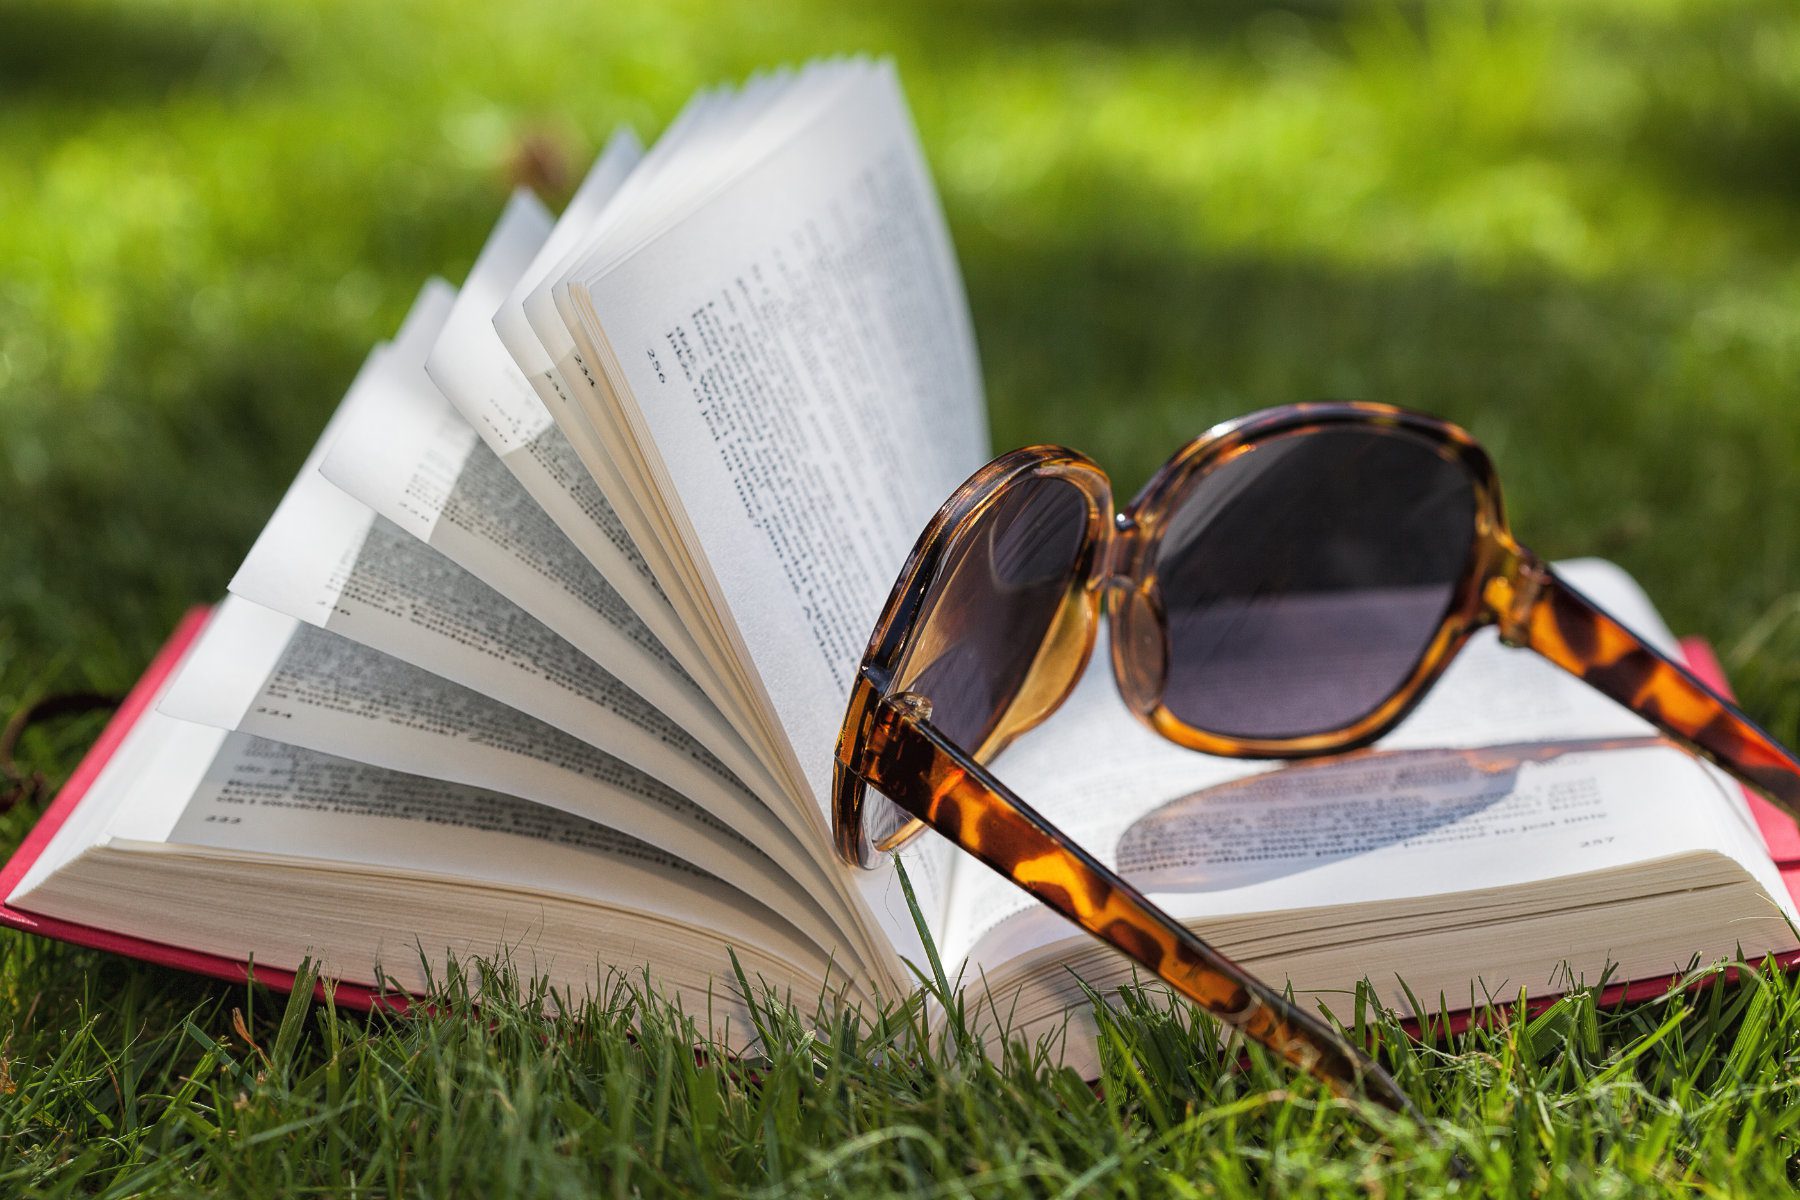 Sunglasses on a book